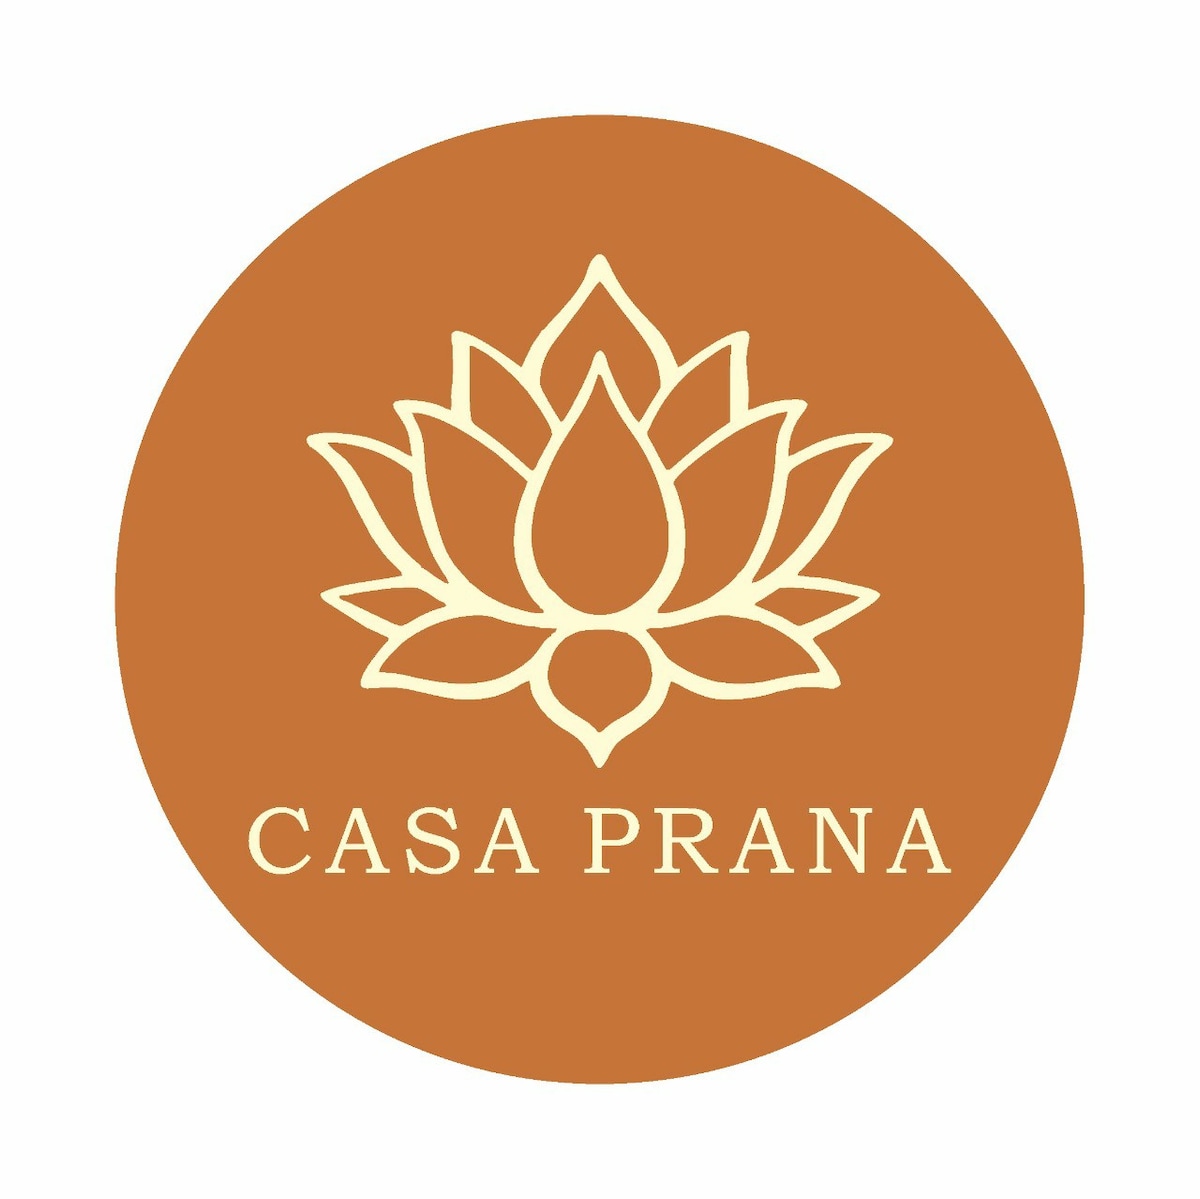 Casa Prana
-游泳池